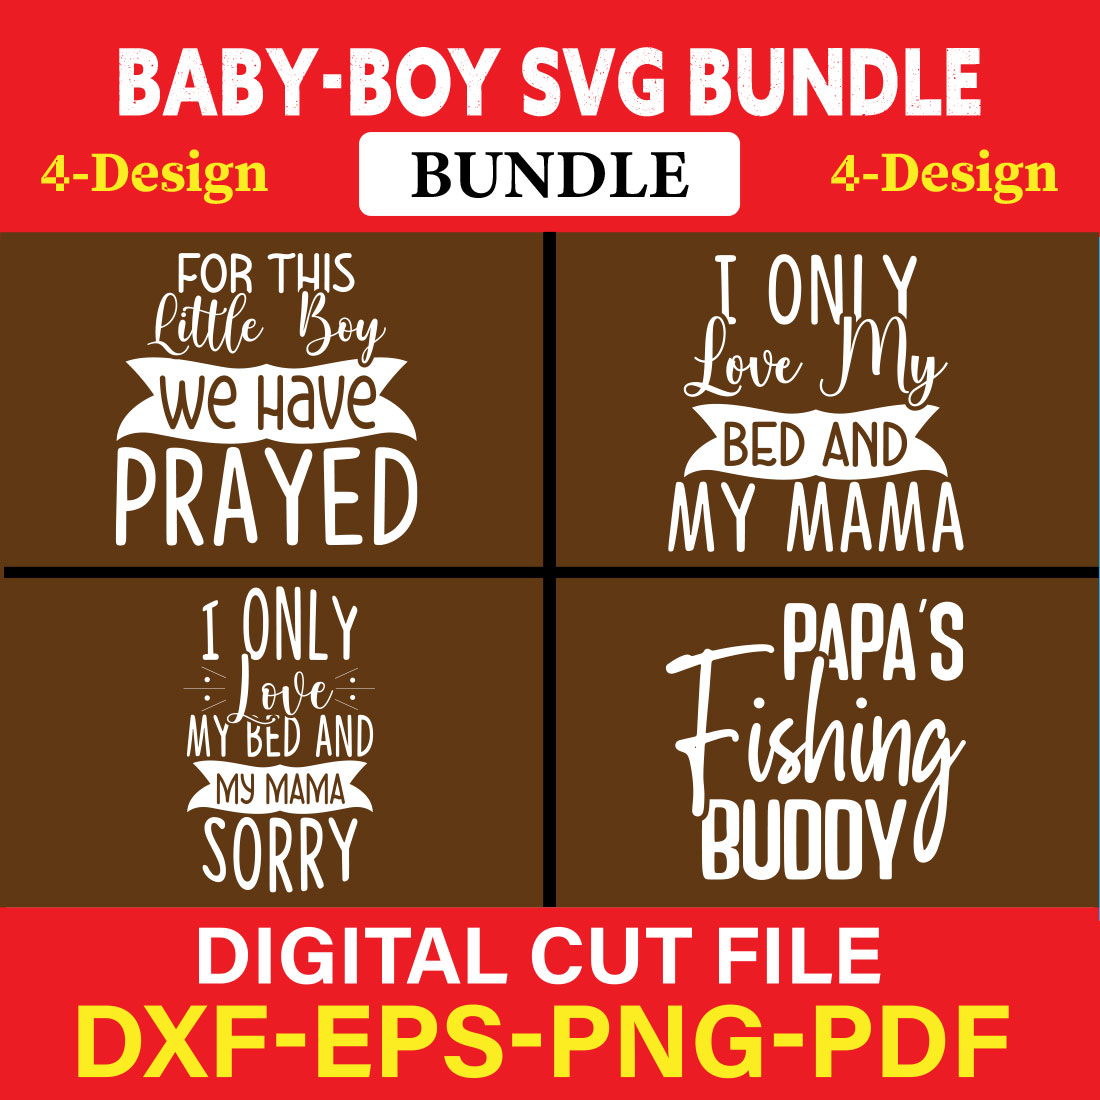 Baby Boy T-shirt Design Bundle Vol-4 cover image.